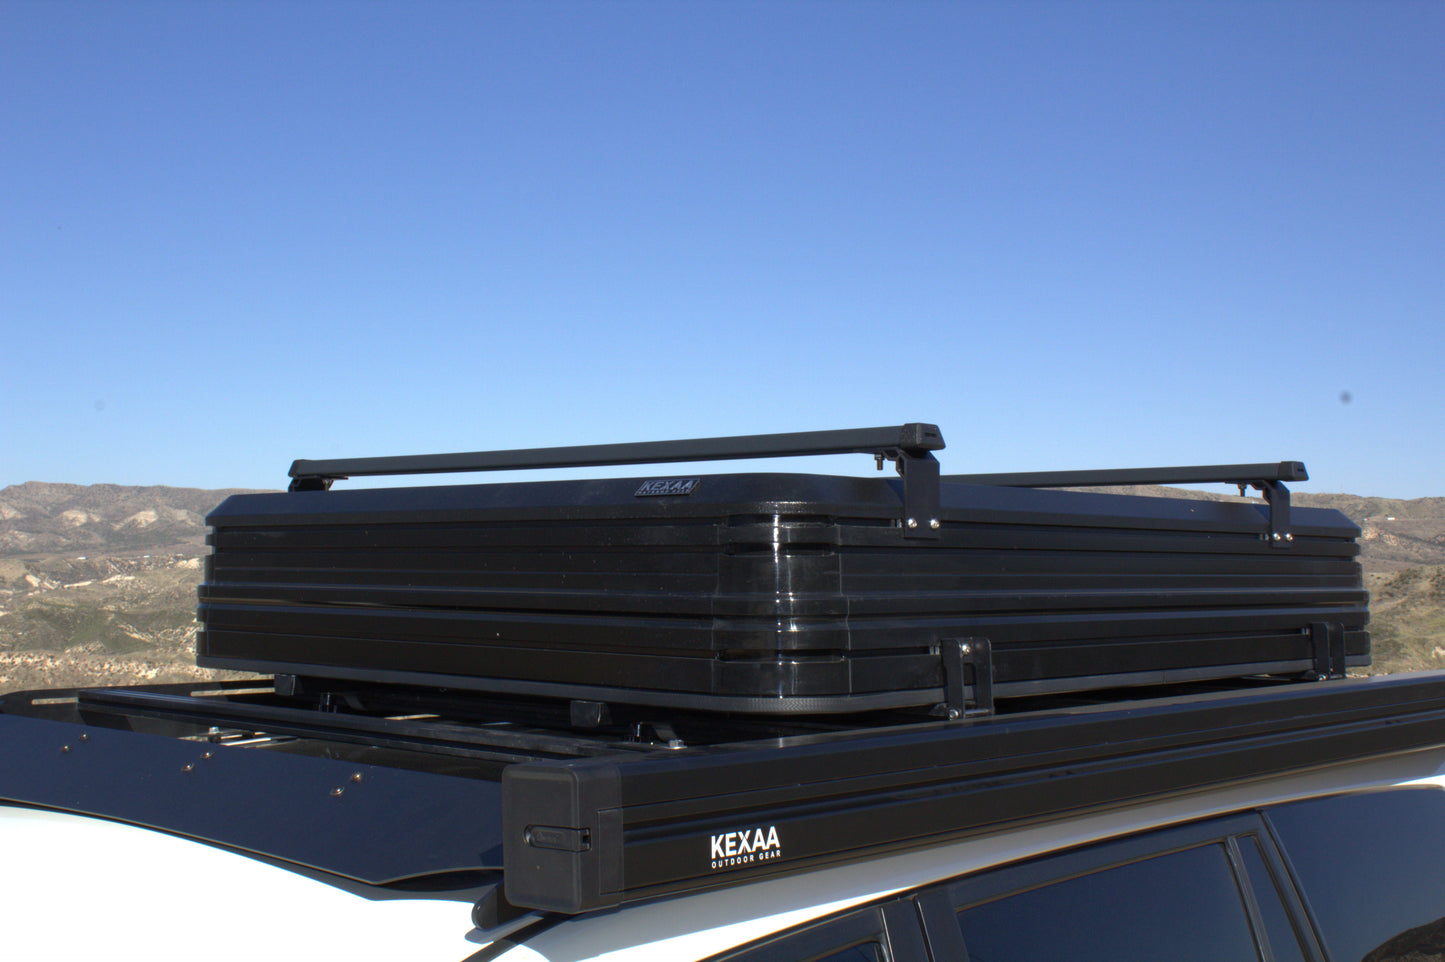 Kexaa Outdoor Gear Aluminum Hardshell Rooftop Tent with Cross Bars